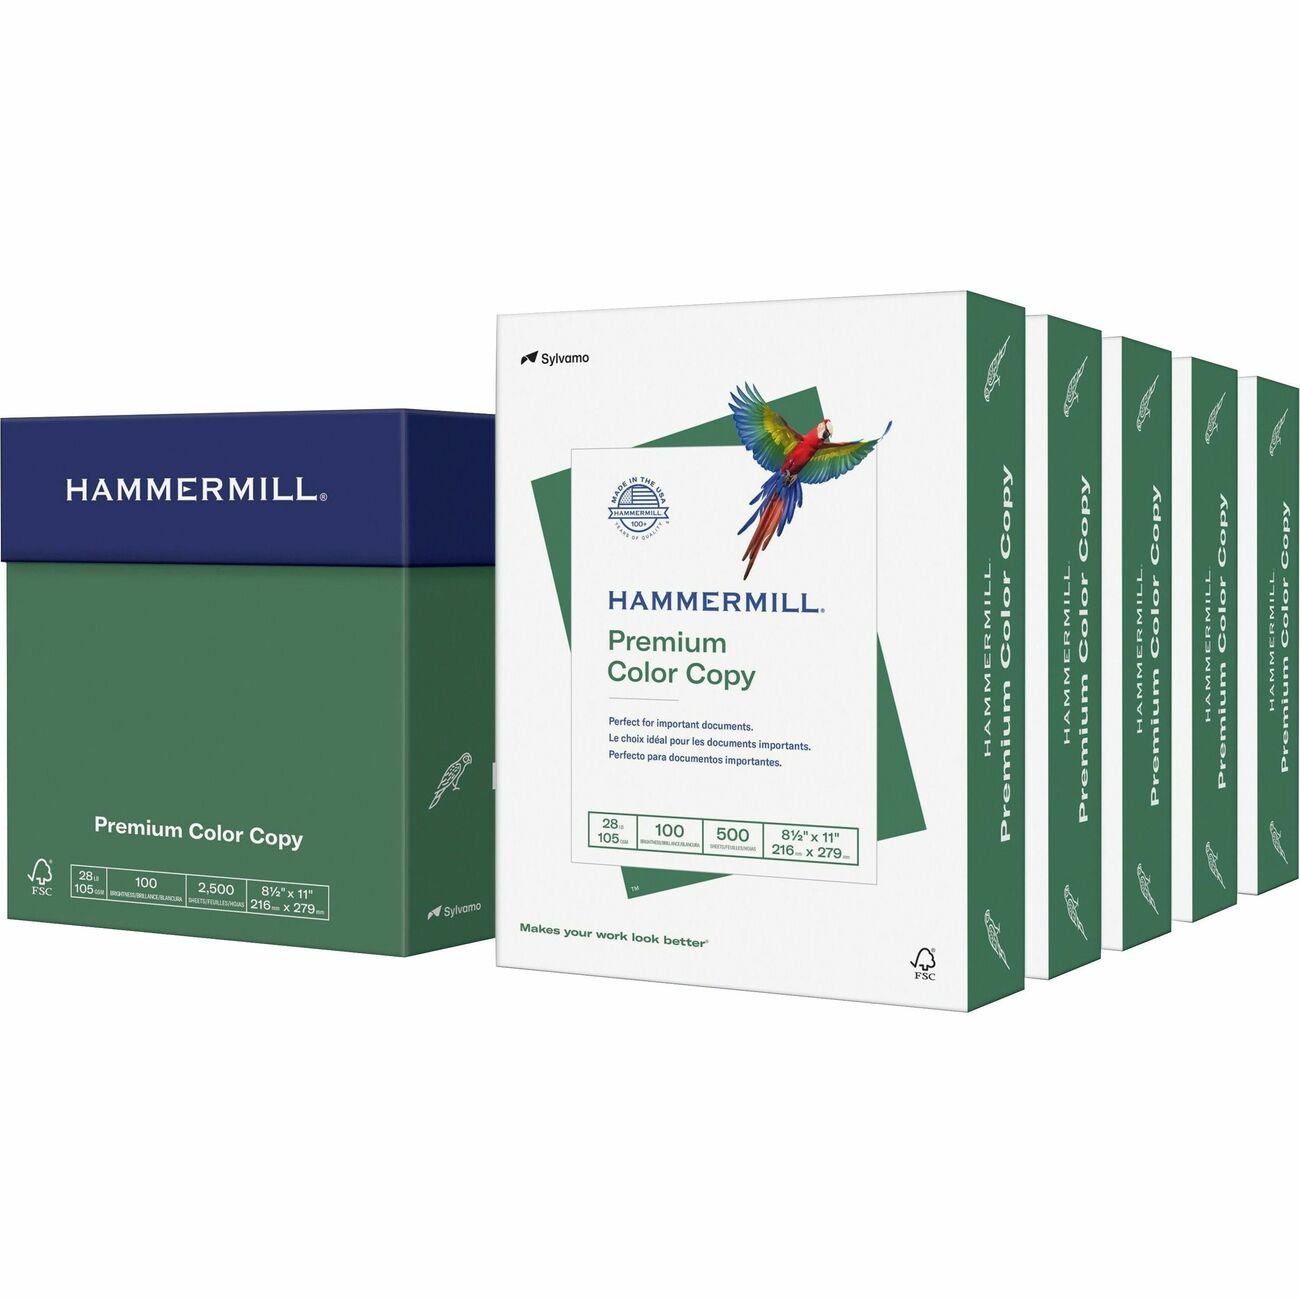 Hammermill Color Copy Digital Paper 102541